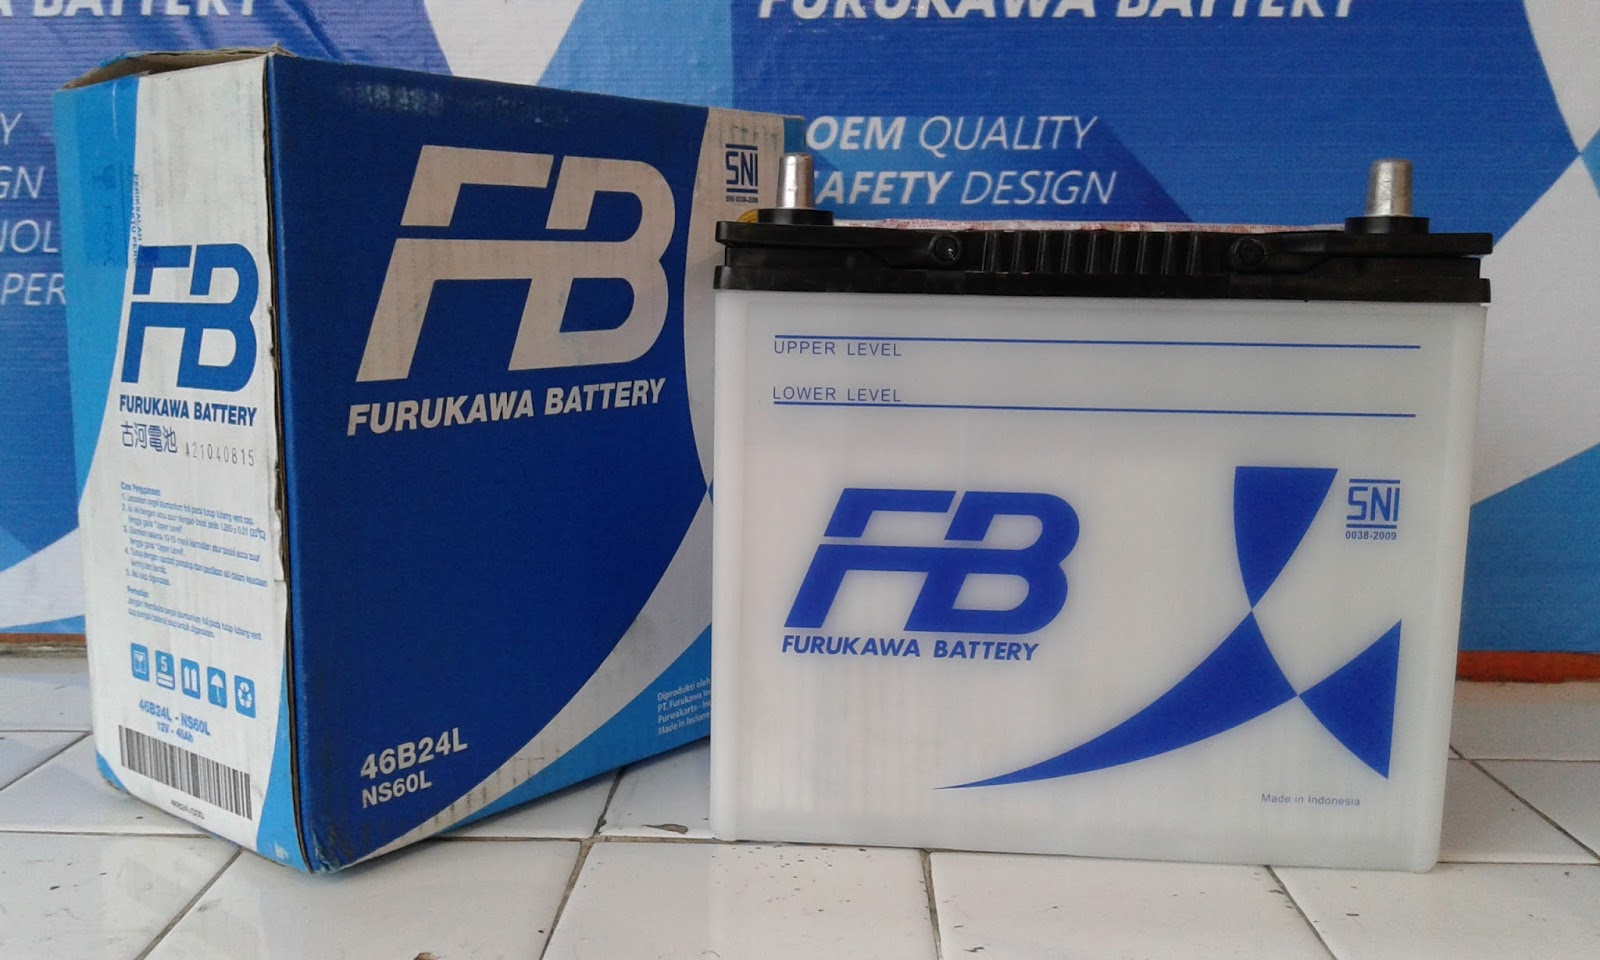 Furukawa Battery fb001. Автомобильный аккумулятор 12в 50 ампер Furukawa Battery. Furukawa Battery Upper Level.